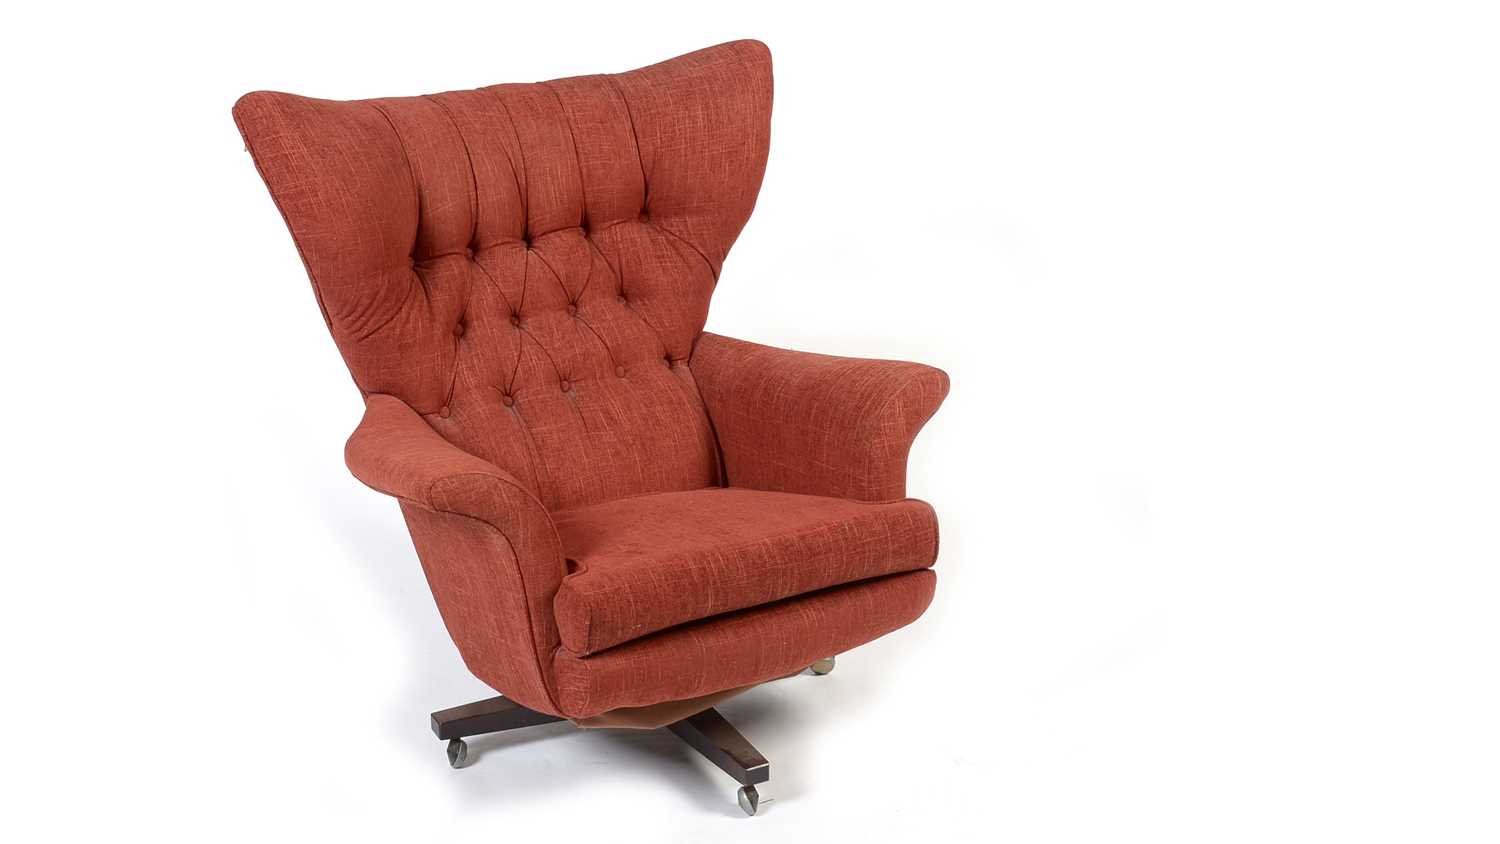 G Plan Model 6250: a 20th Century button back swivel armchair